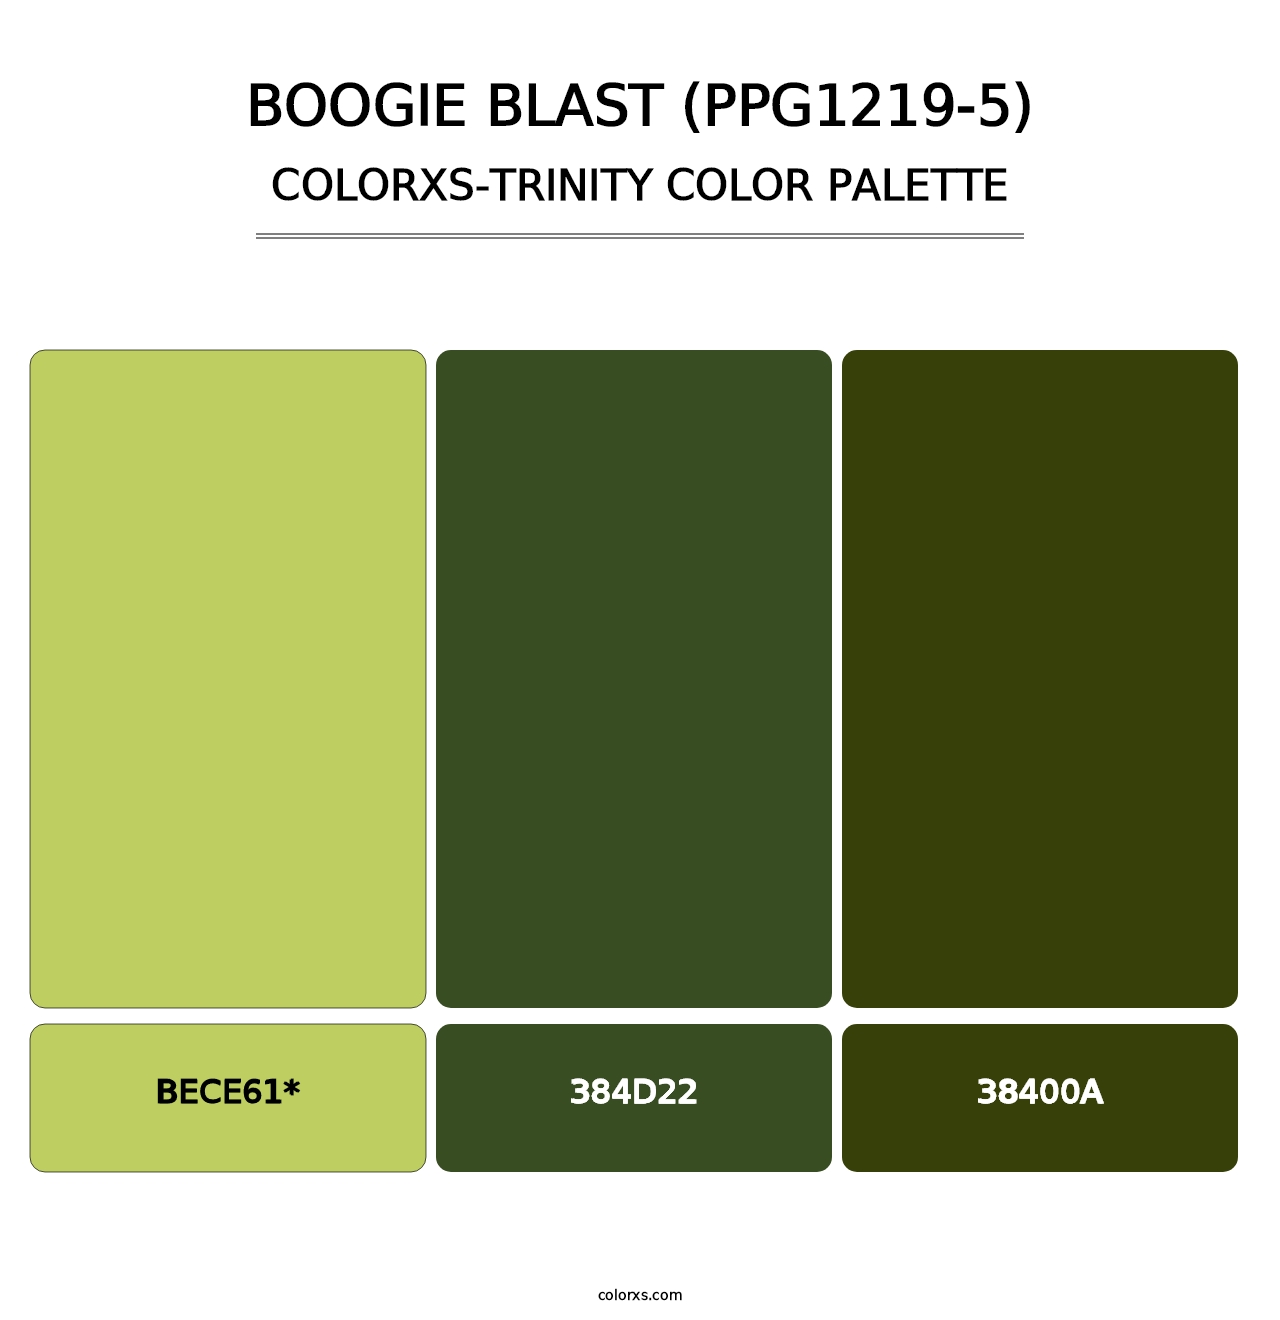 Boogie Blast (PPG1219-5) - Colorxs Trinity Palette